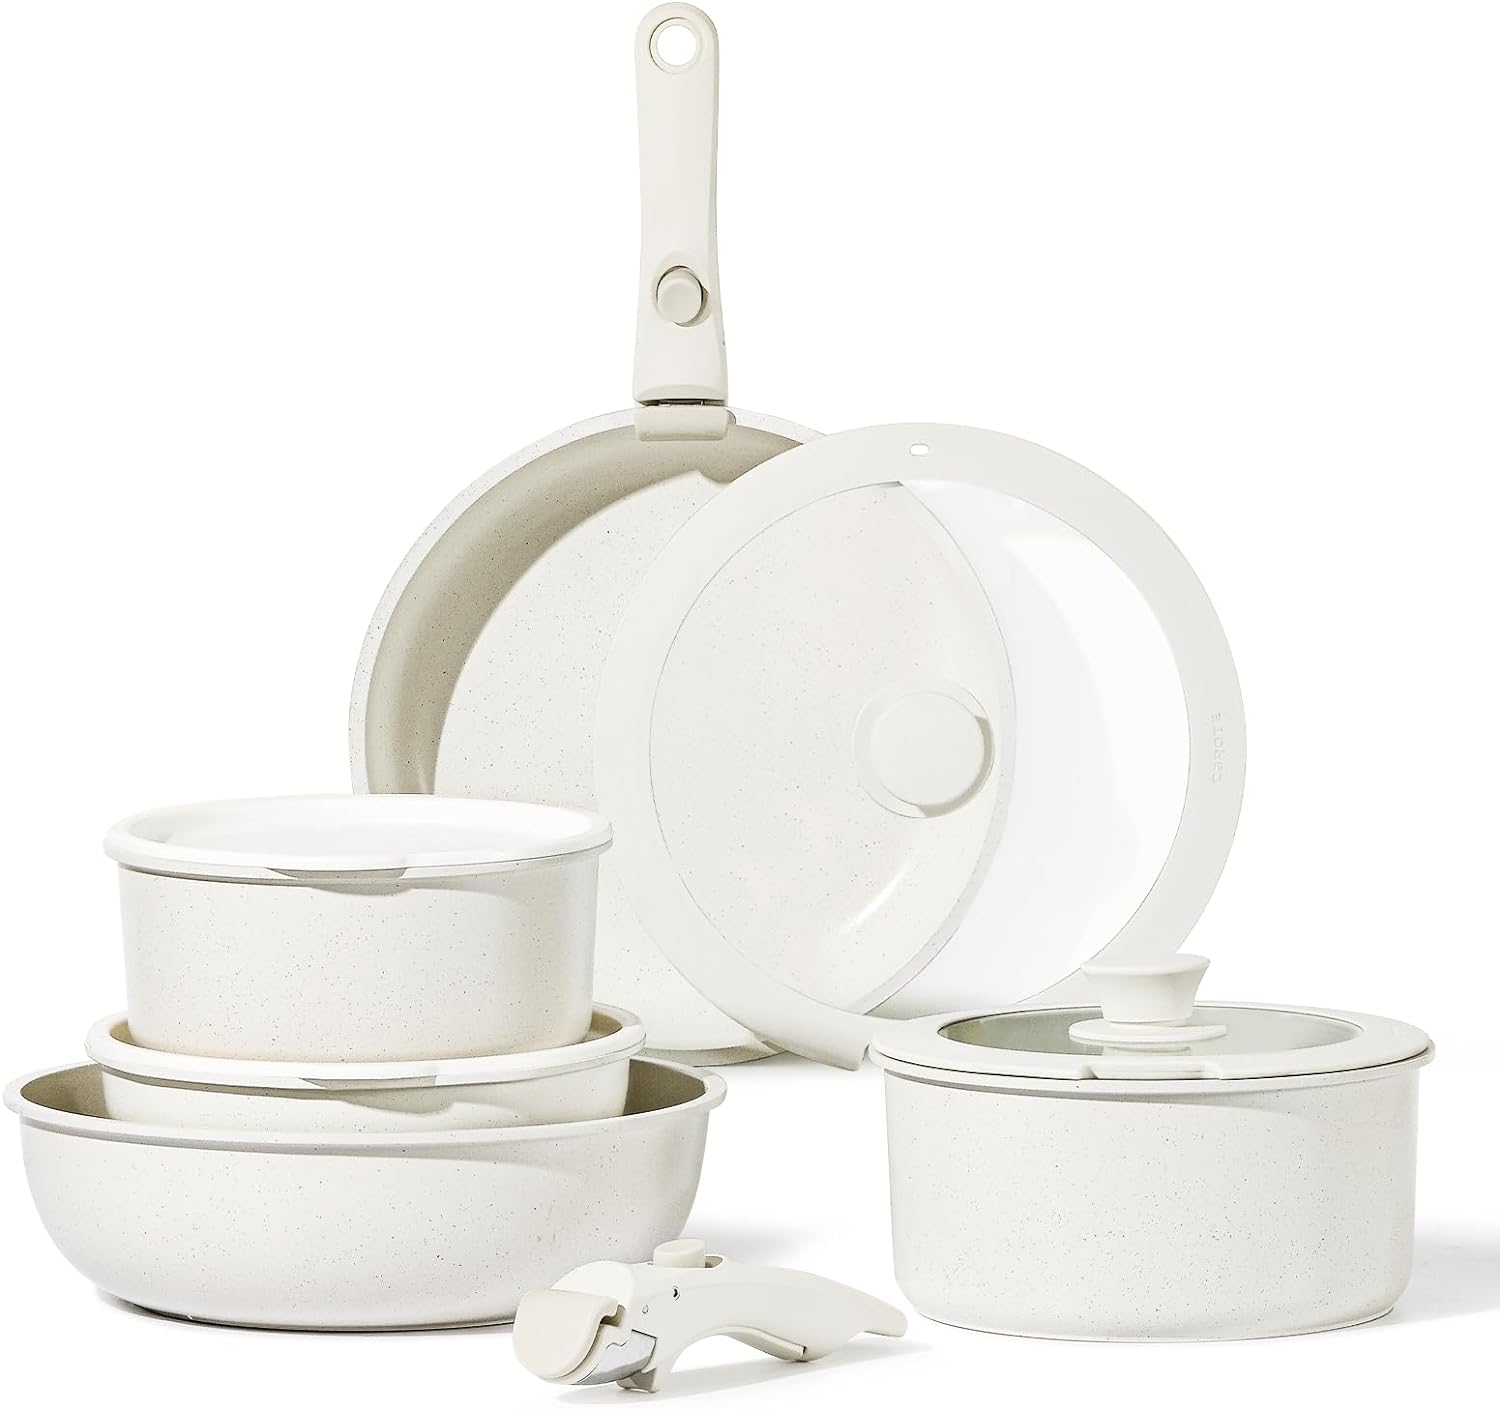 11-Piece Carote Nonstick Granite Cookware Set w/ Detachable Handles (Cream White) $59.99 + Free Shipping